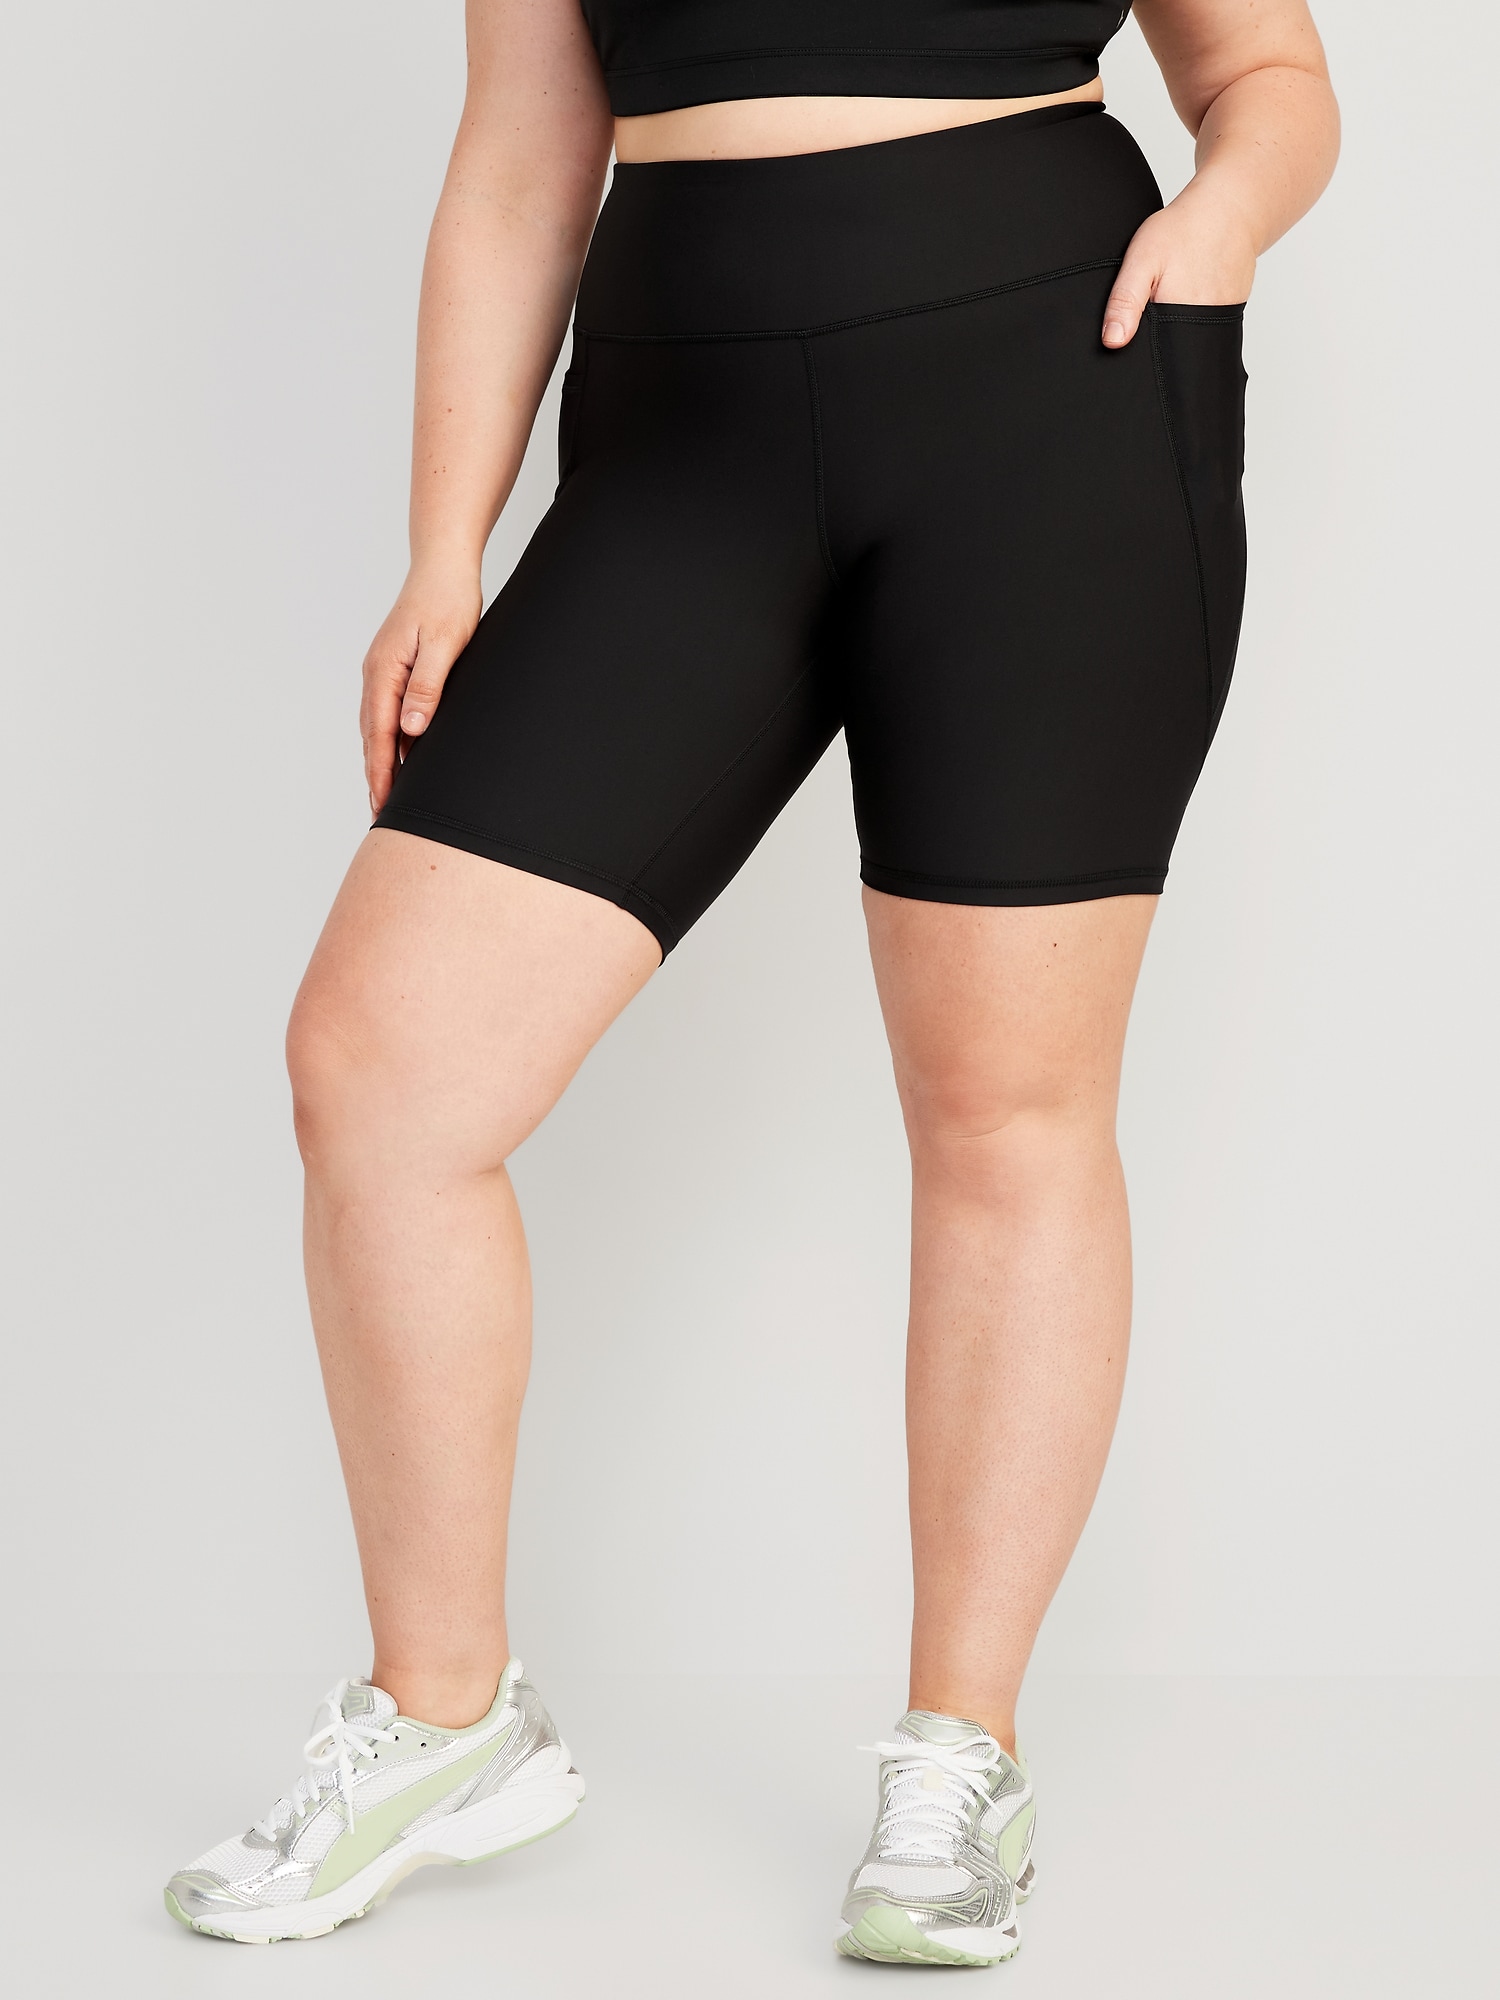 Womens Shorts Women Plus Size Basic Slip Bike Shorts Workout Leggings Yoga  Shorts Pants Summer Shorts on Clearance 